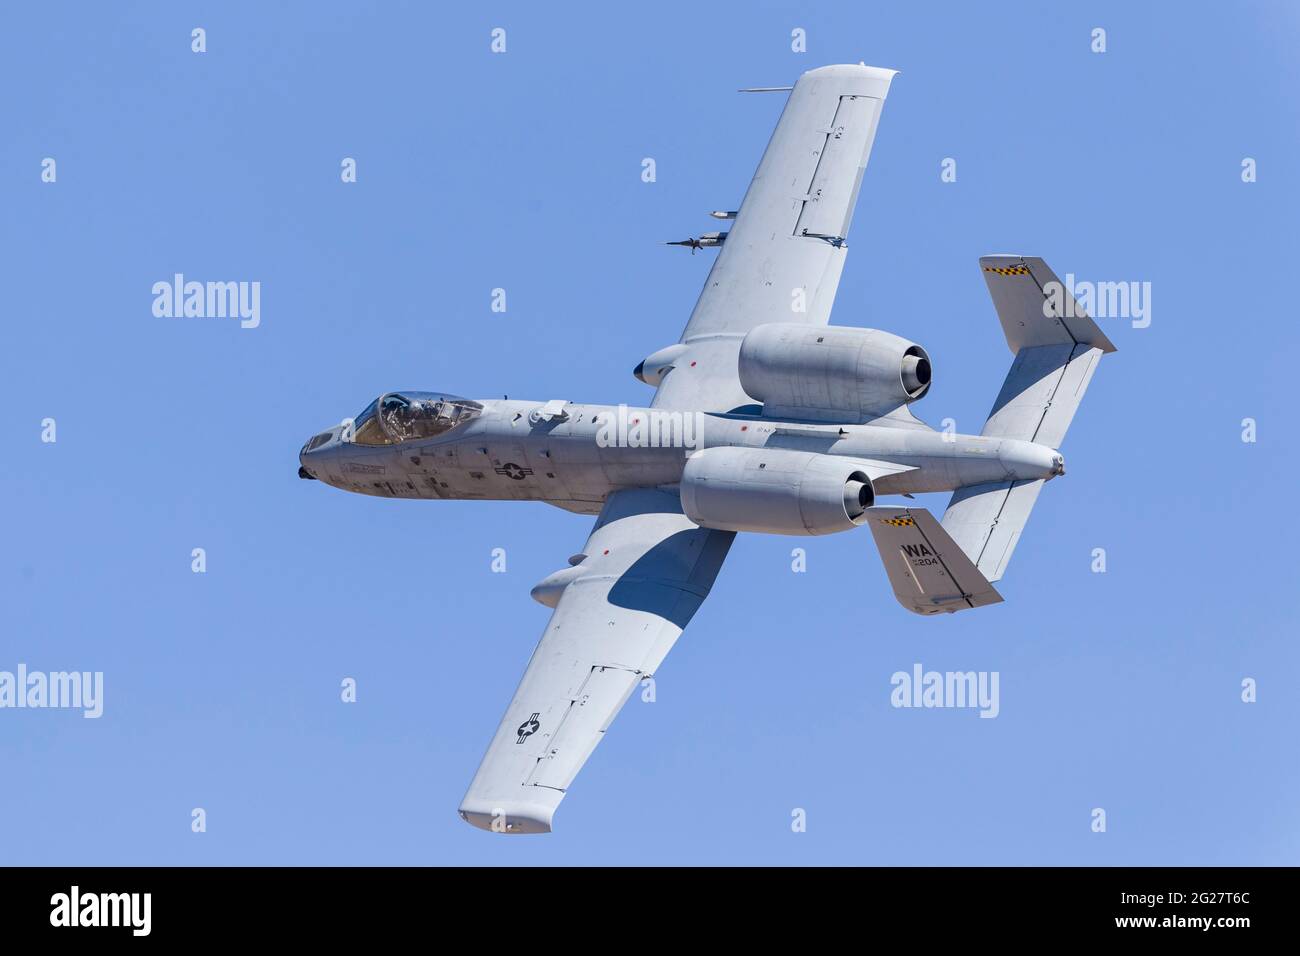 A U.S. Air Force A-10 Thunderbolt II. Stock Photo